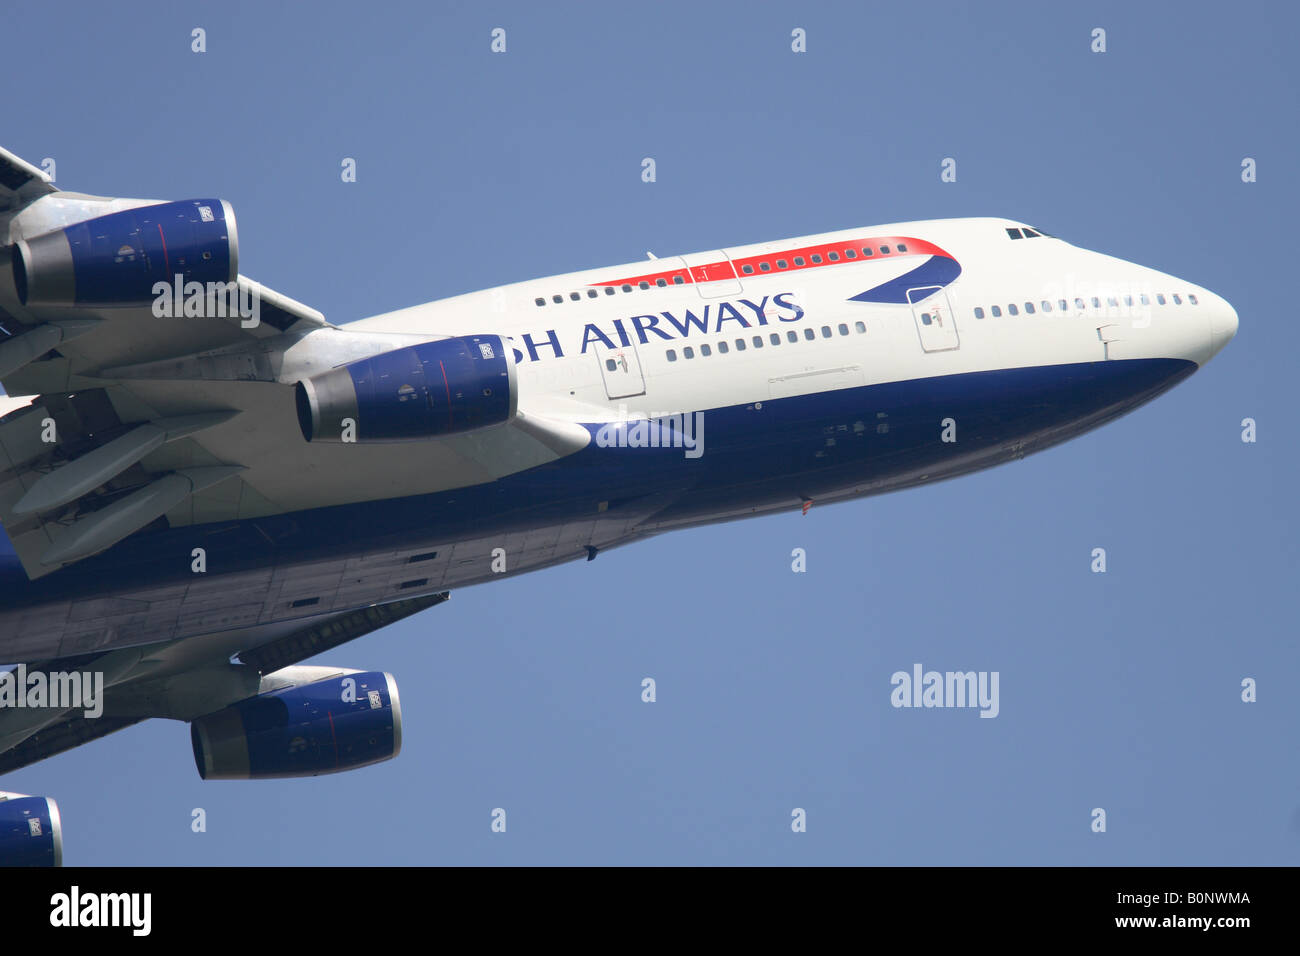 British Airways Boeing 747 747-400 jumbo jet departing flying taking off from London Heathrow airport Stock Photo